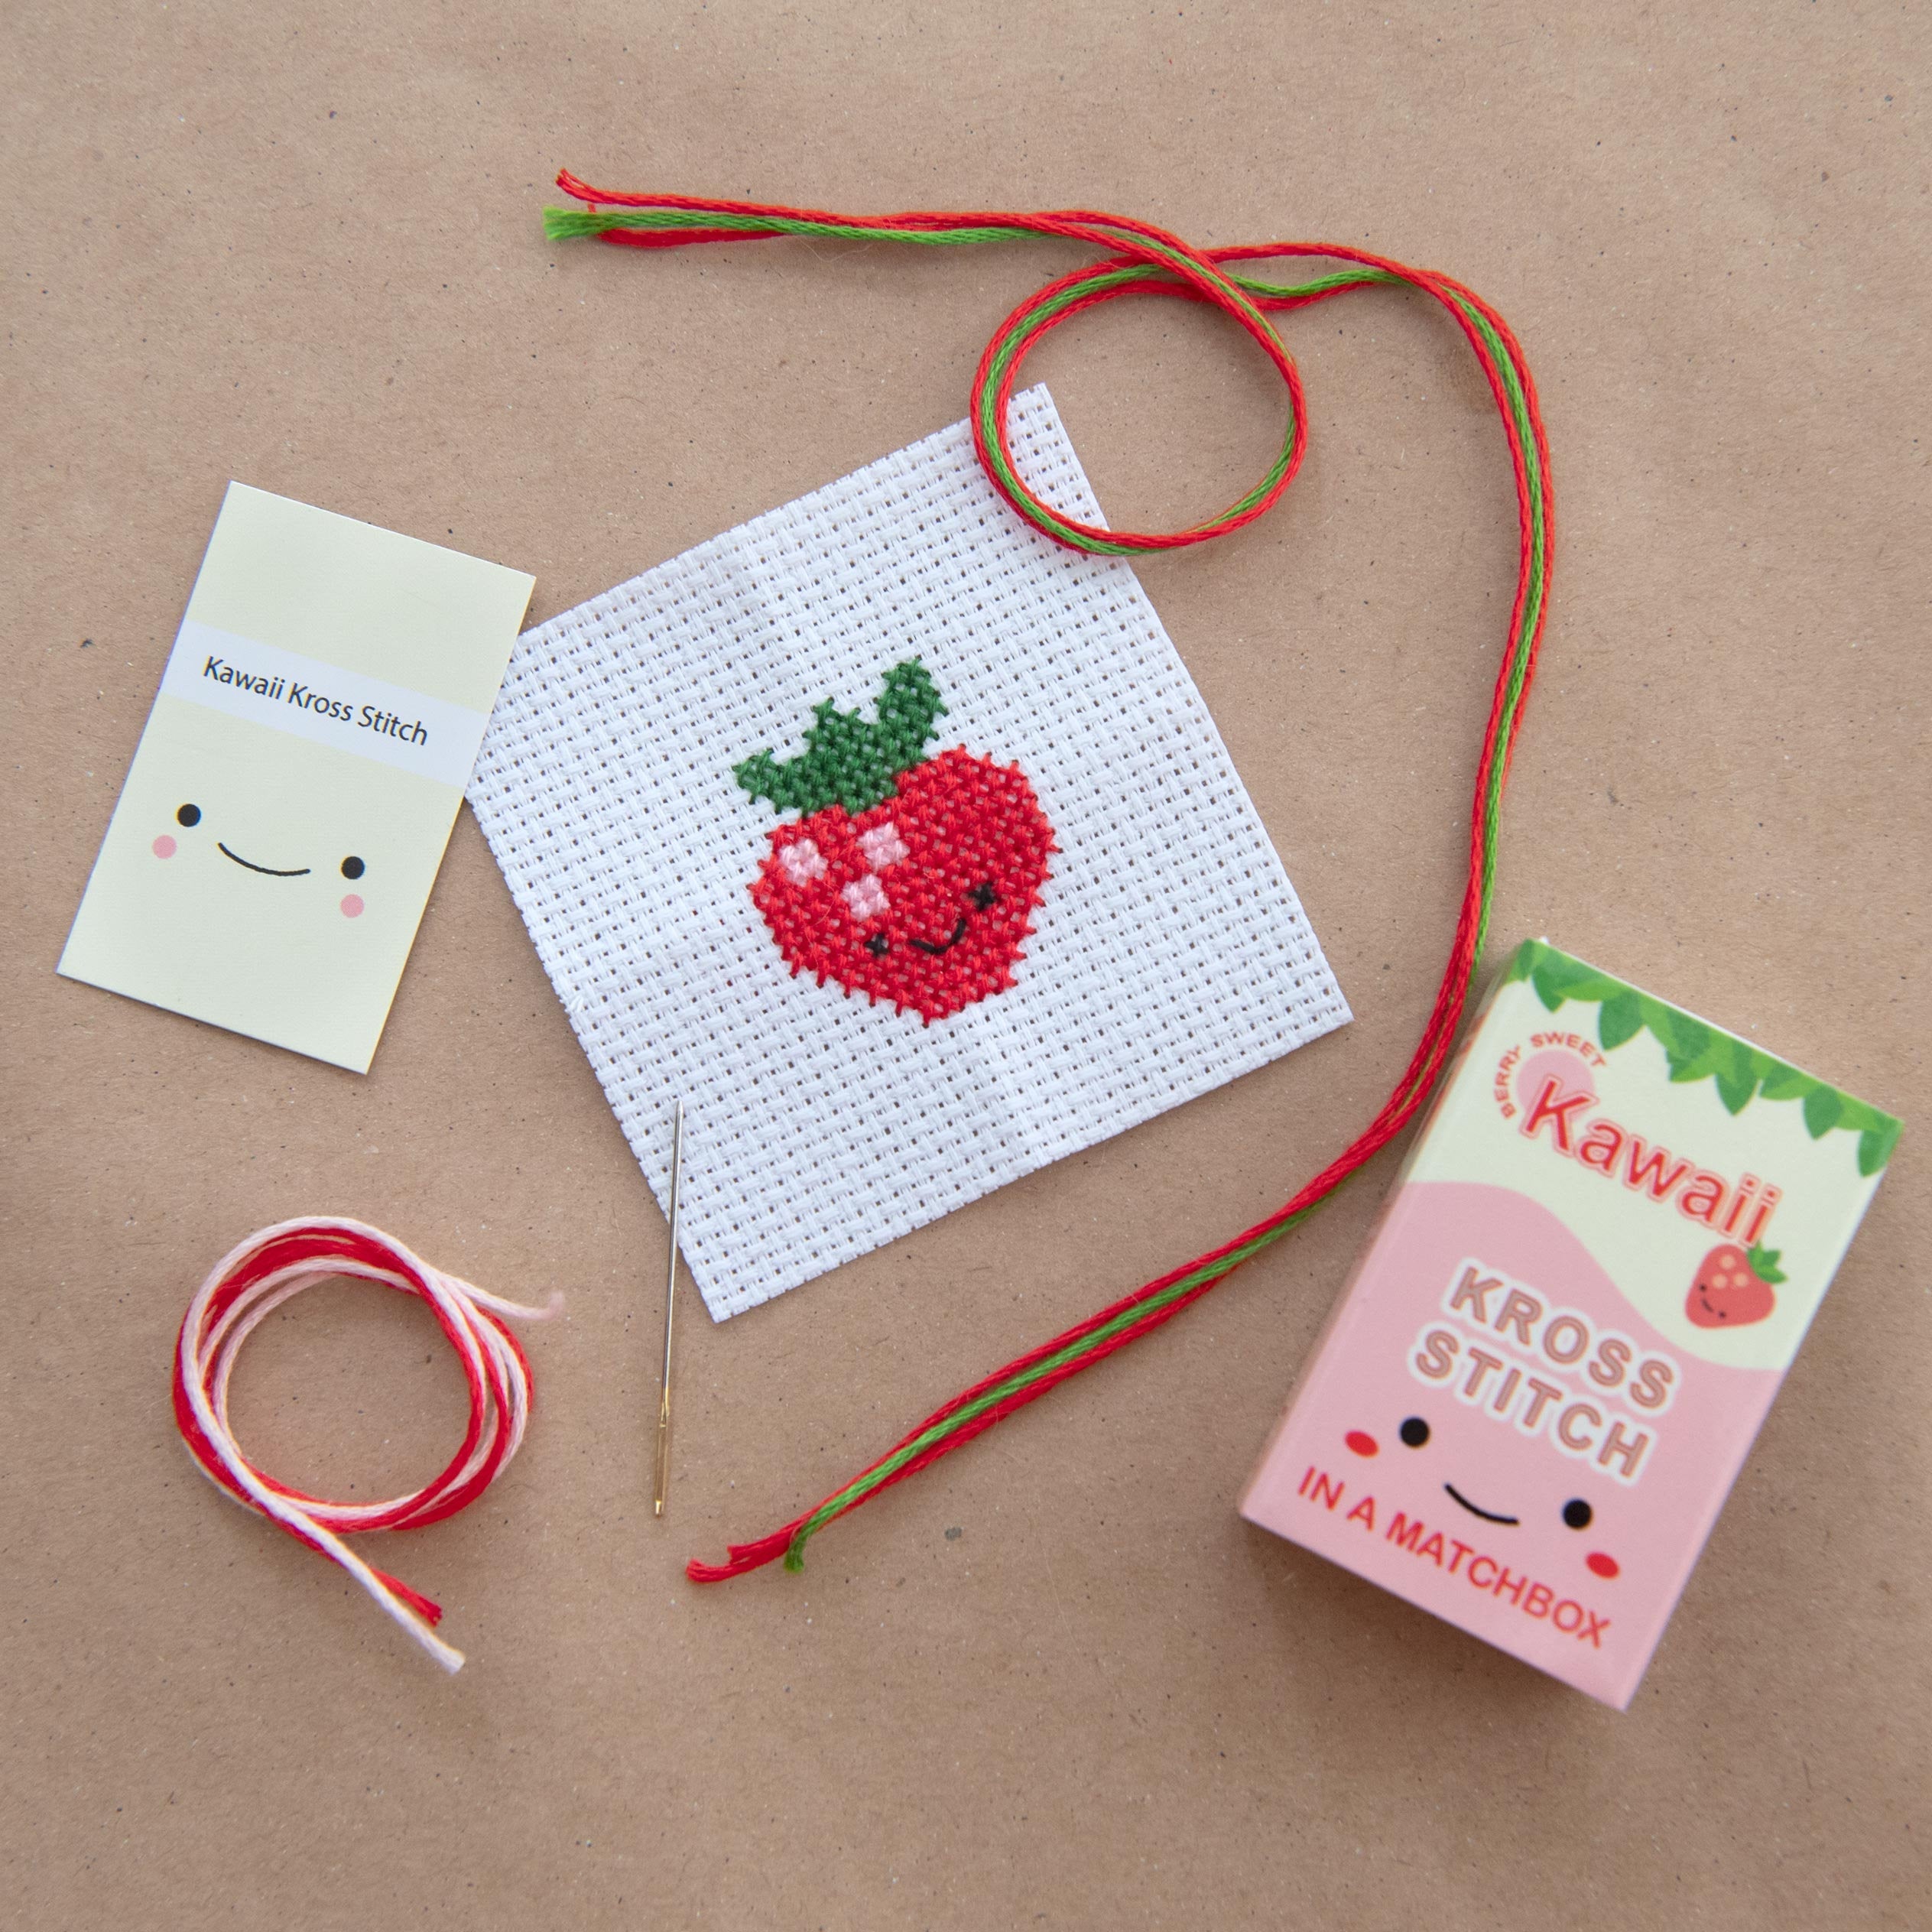 Mini Cross Stitch Kit With Kawaii Strawberry In A Matchbox